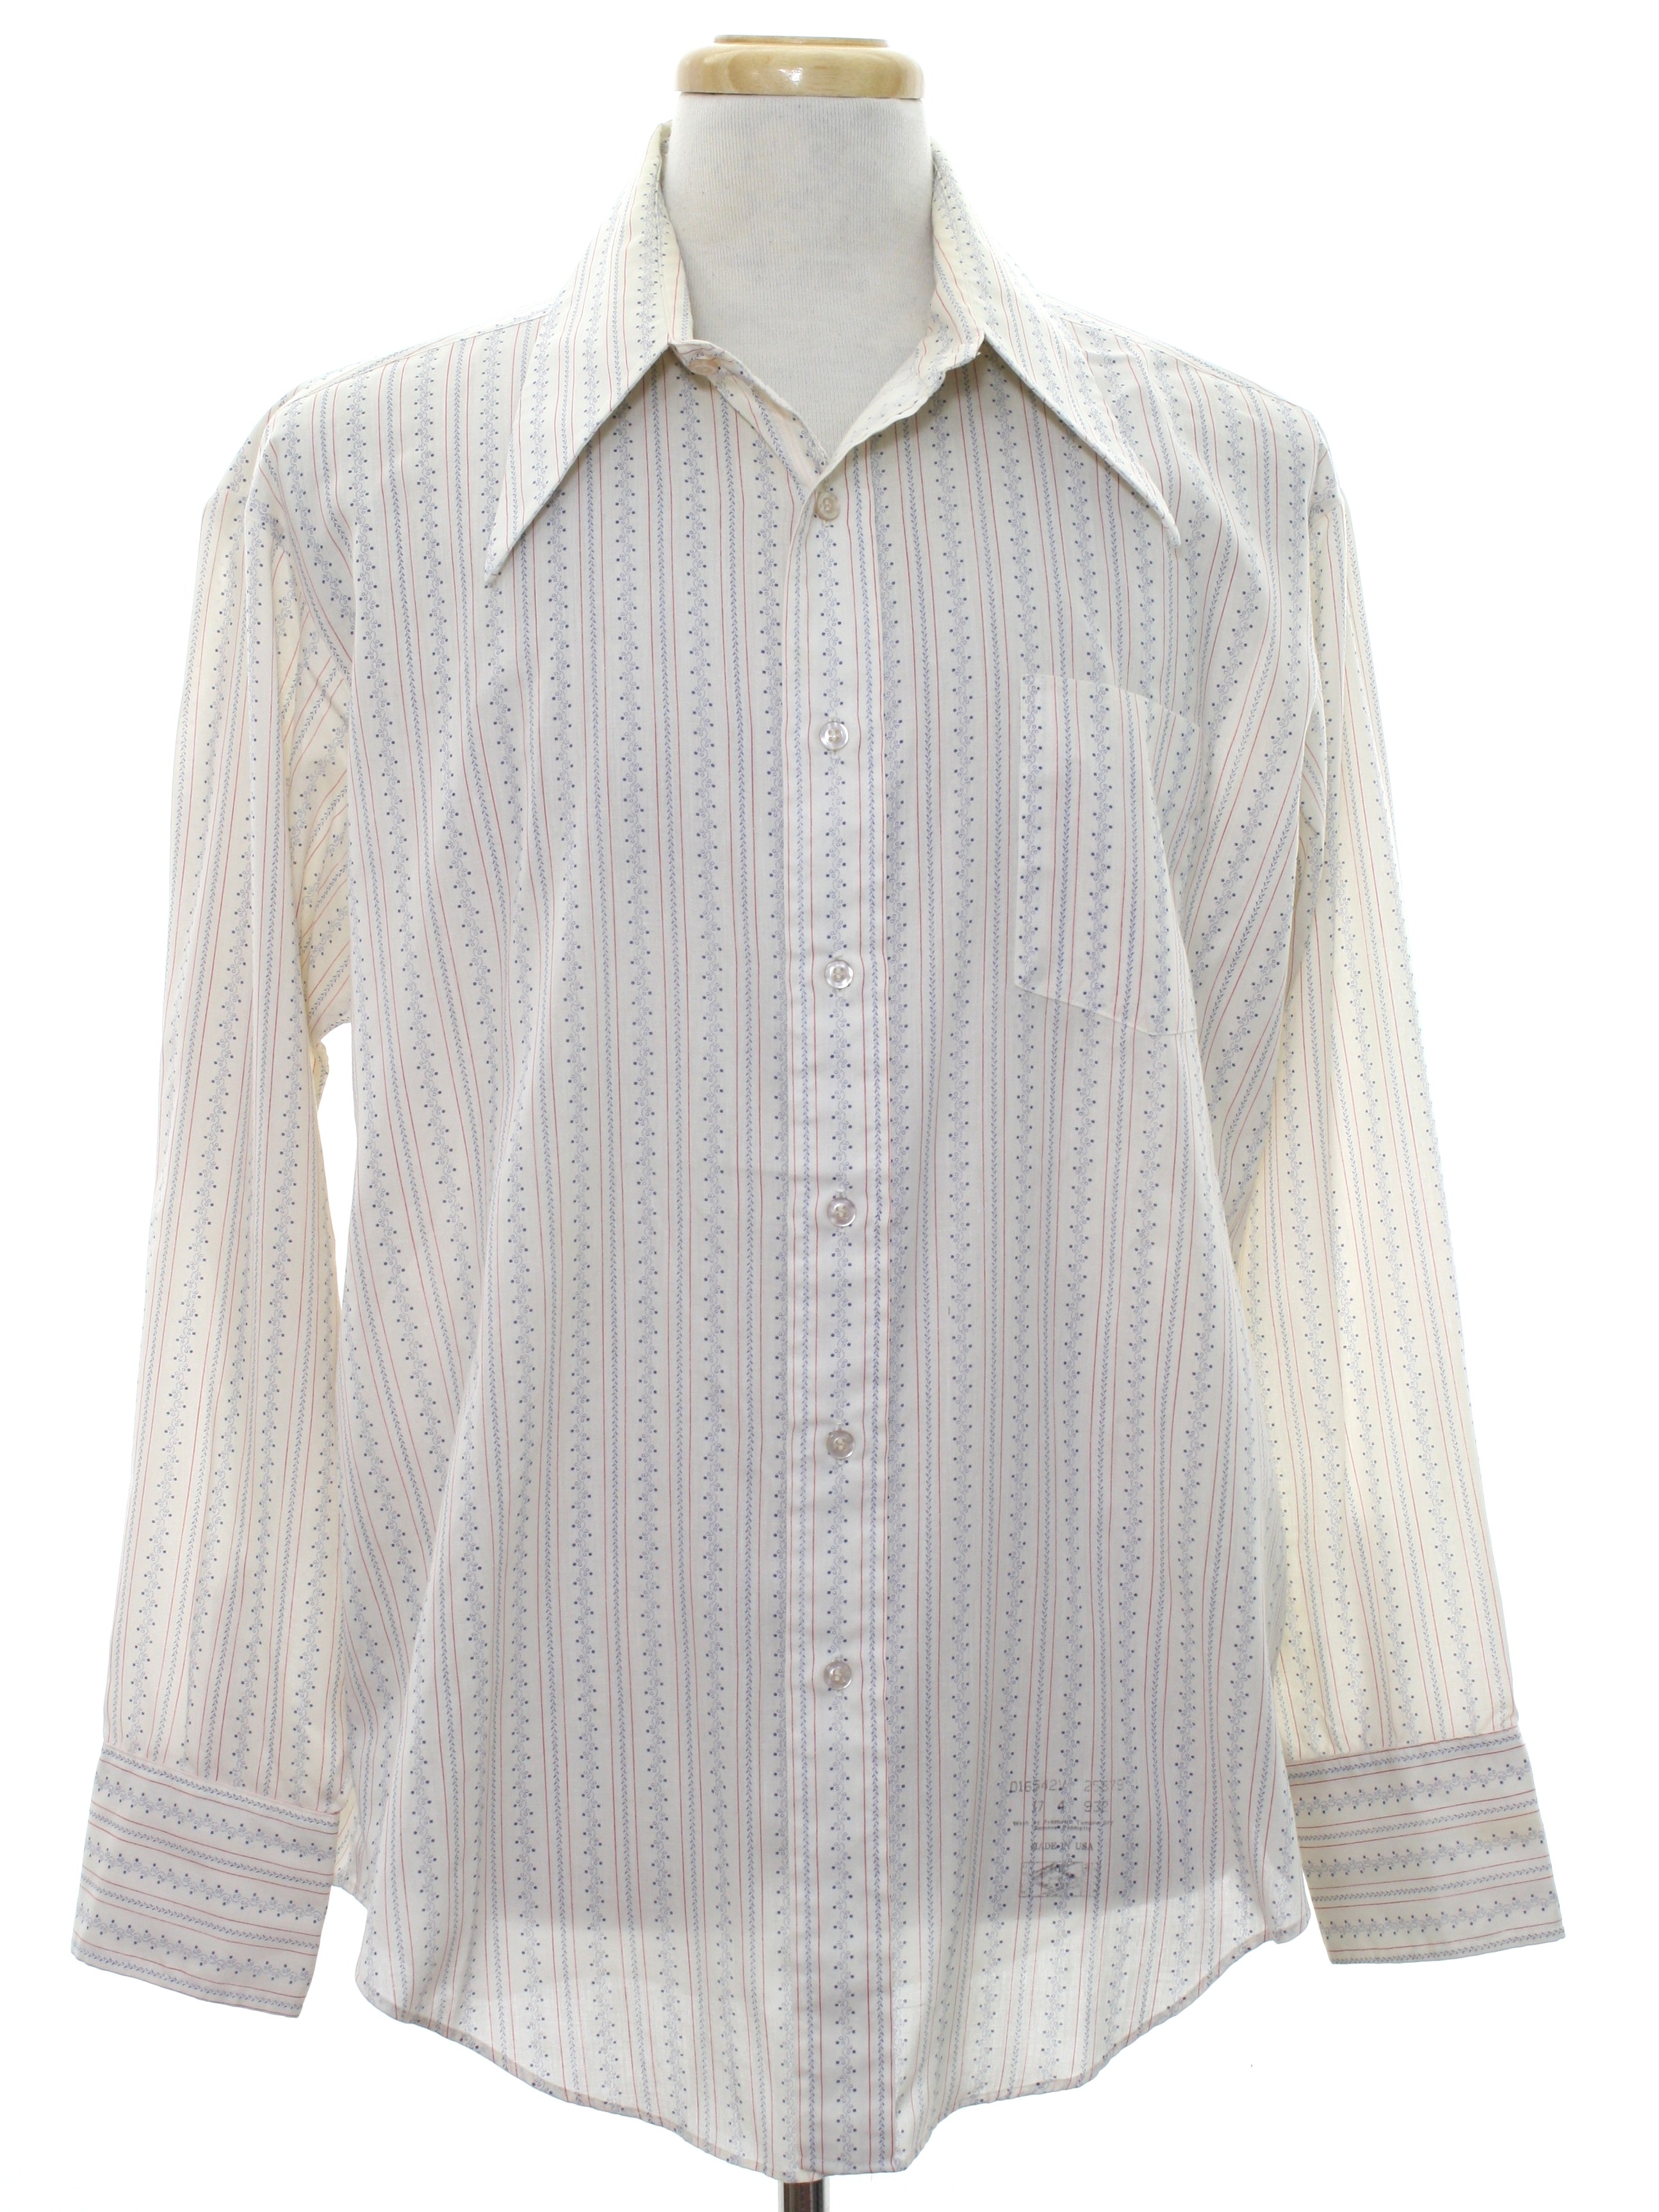 Vintage 70s Print Disco Shirt: 70s -Career Club- Mens white background